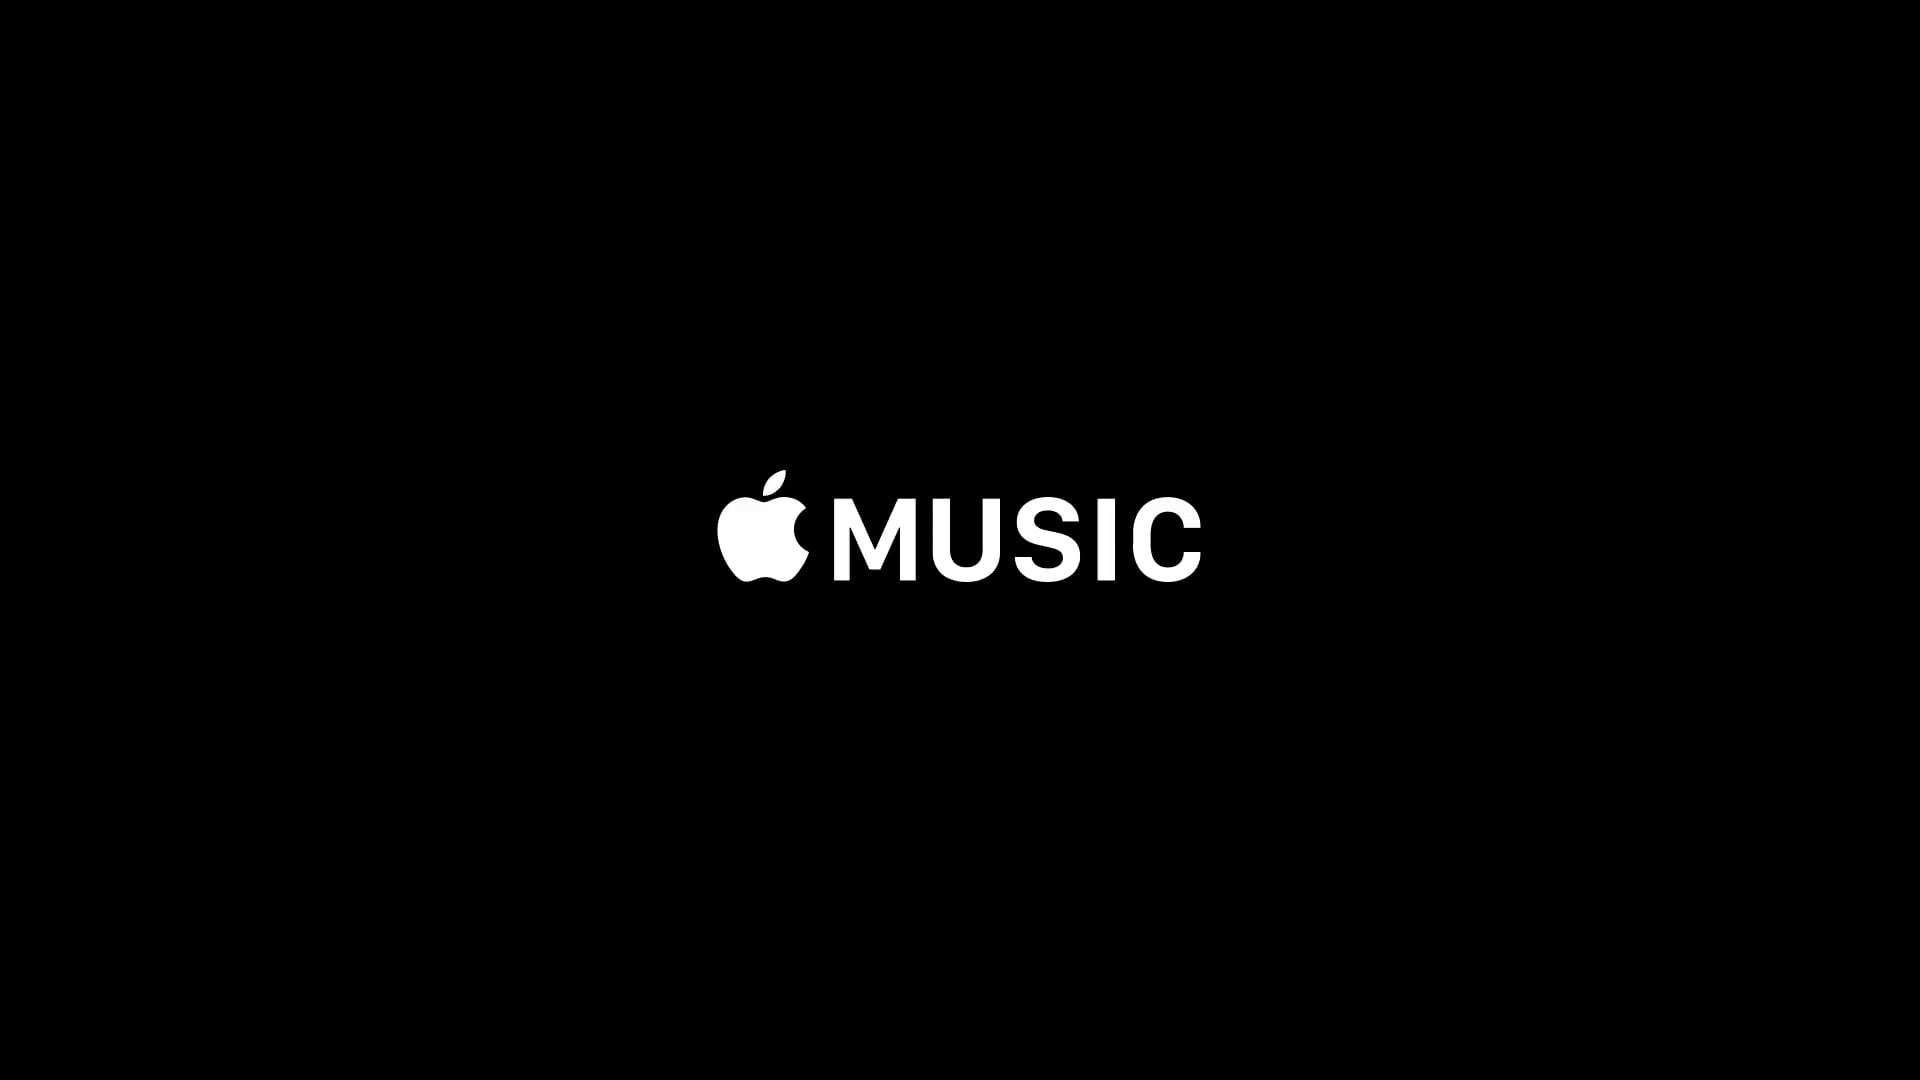 Apple Music - Up Next: Dean Lewis